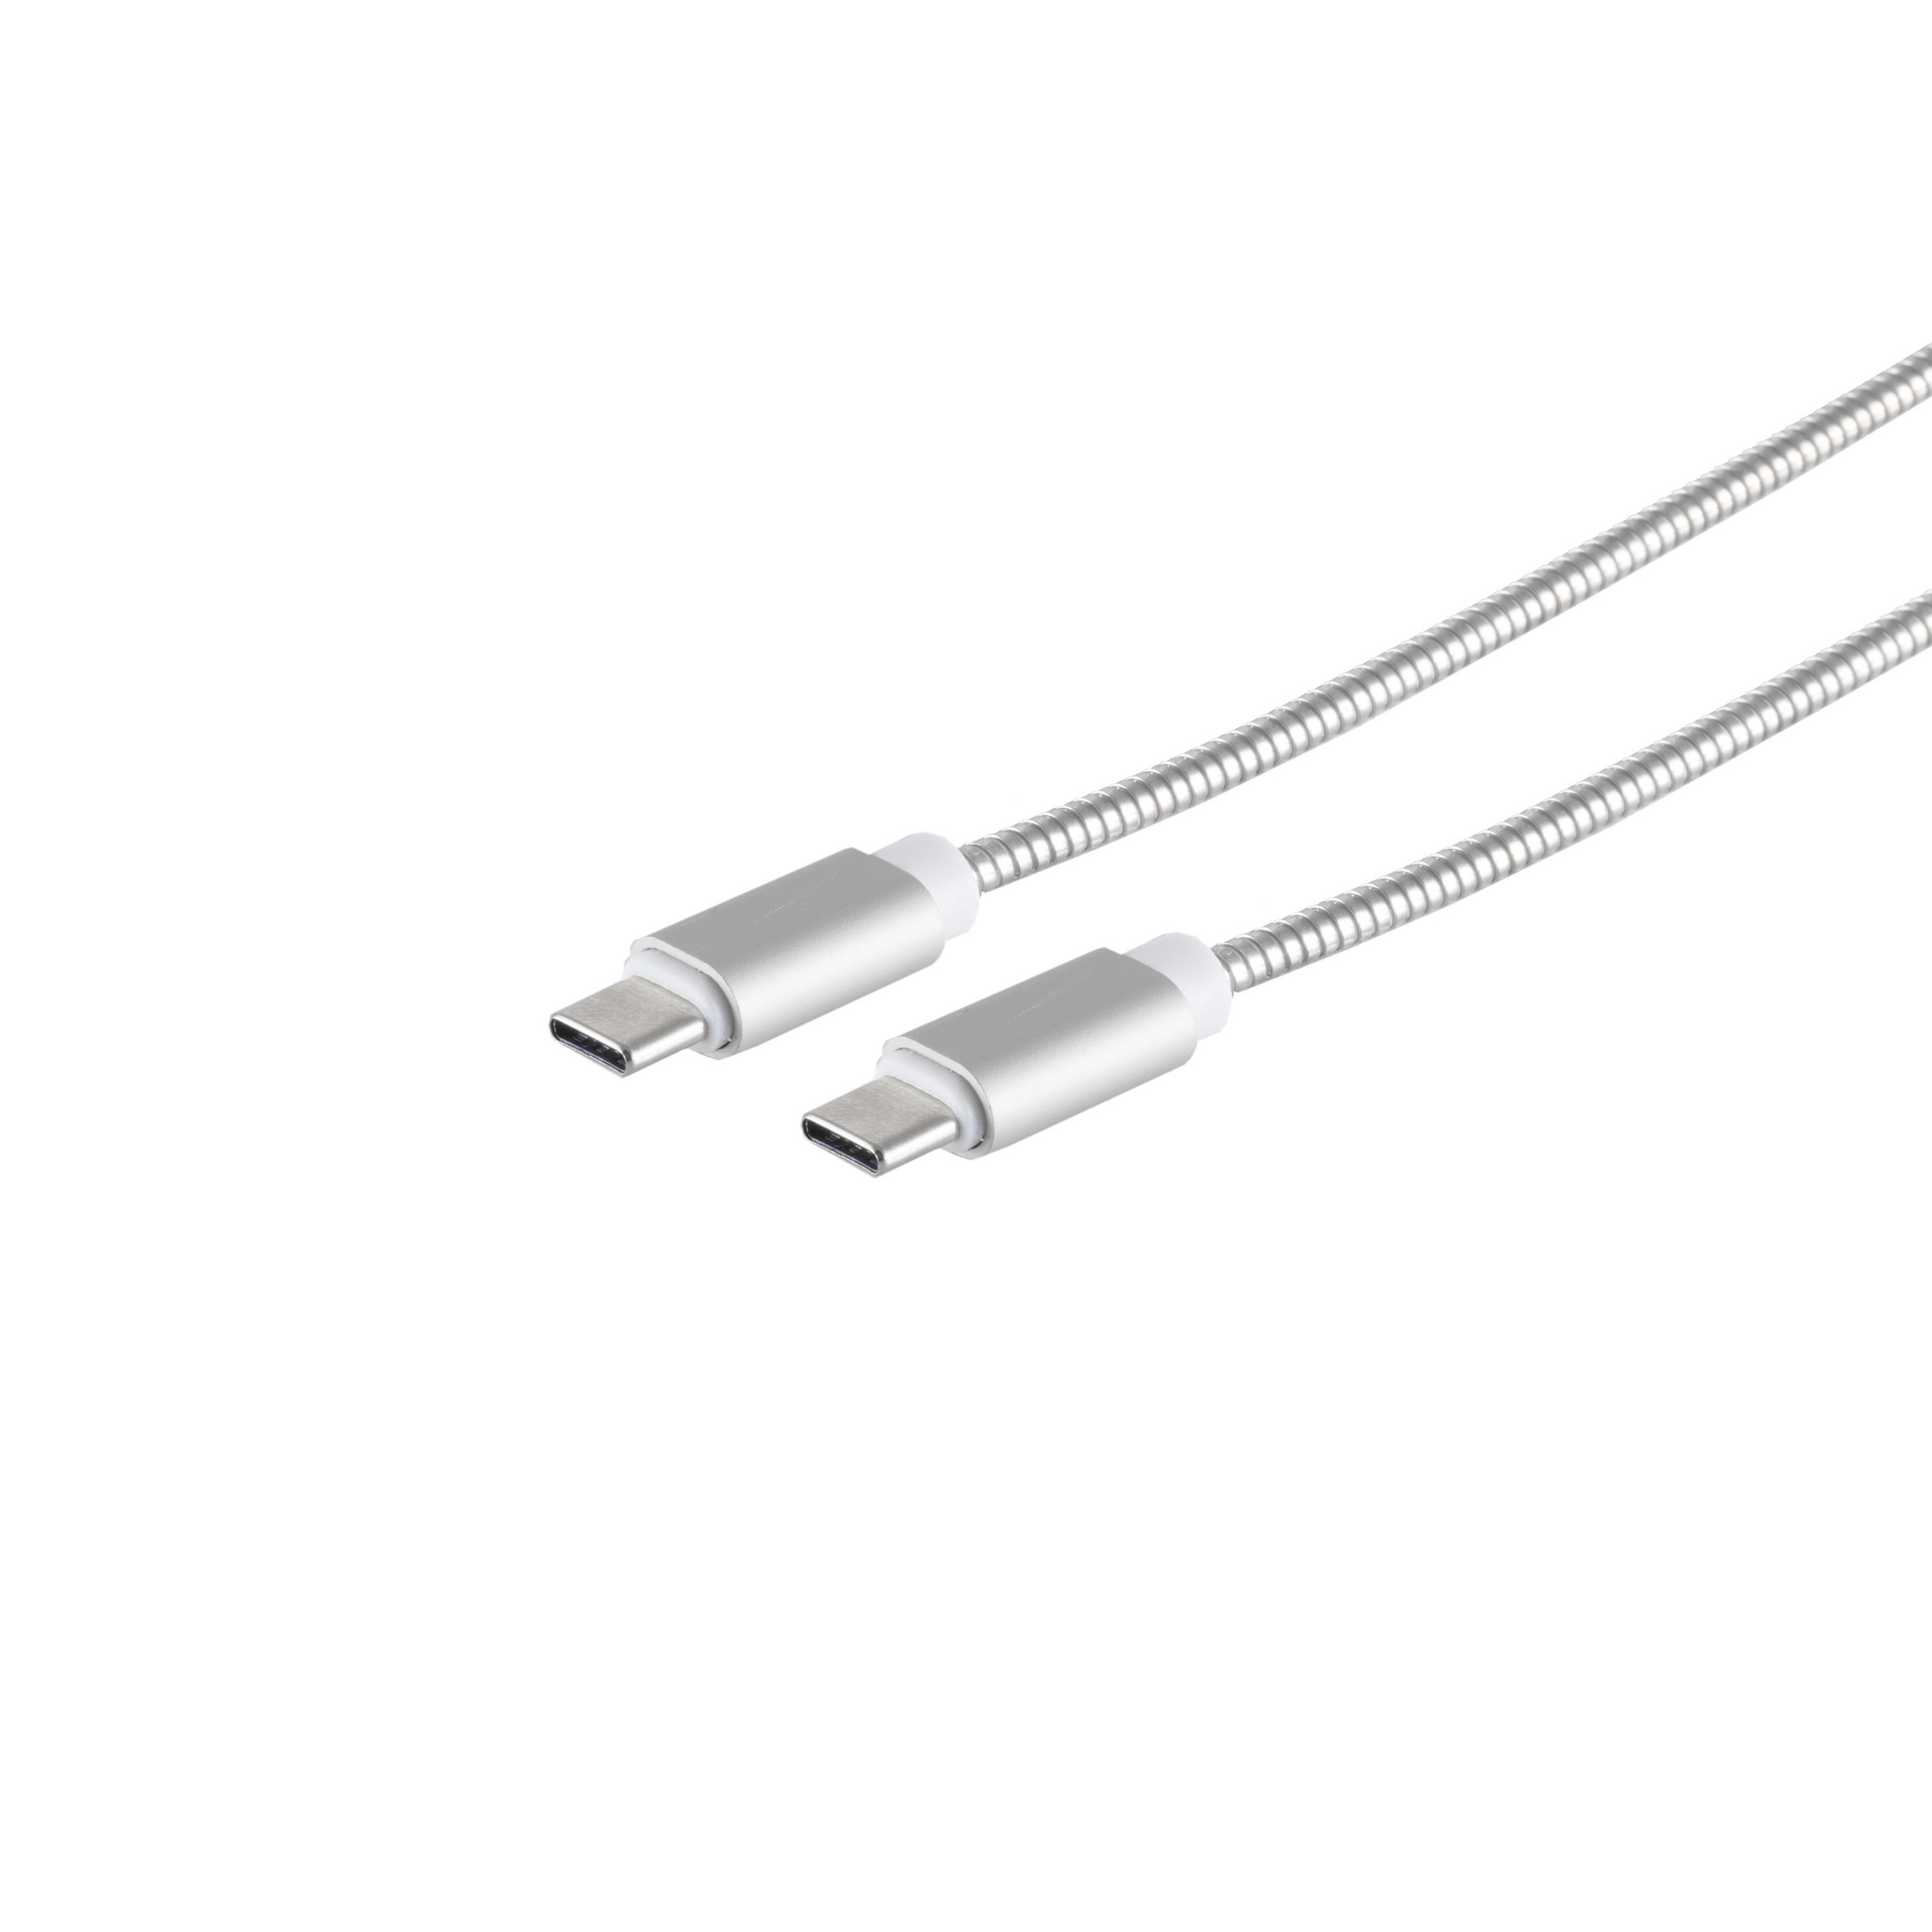 CONNECTIVITY MAXIMUM USB Lade-Sync S/CONN USB Stecker 1m C/ C Steel USB Silber Kabel Kabel